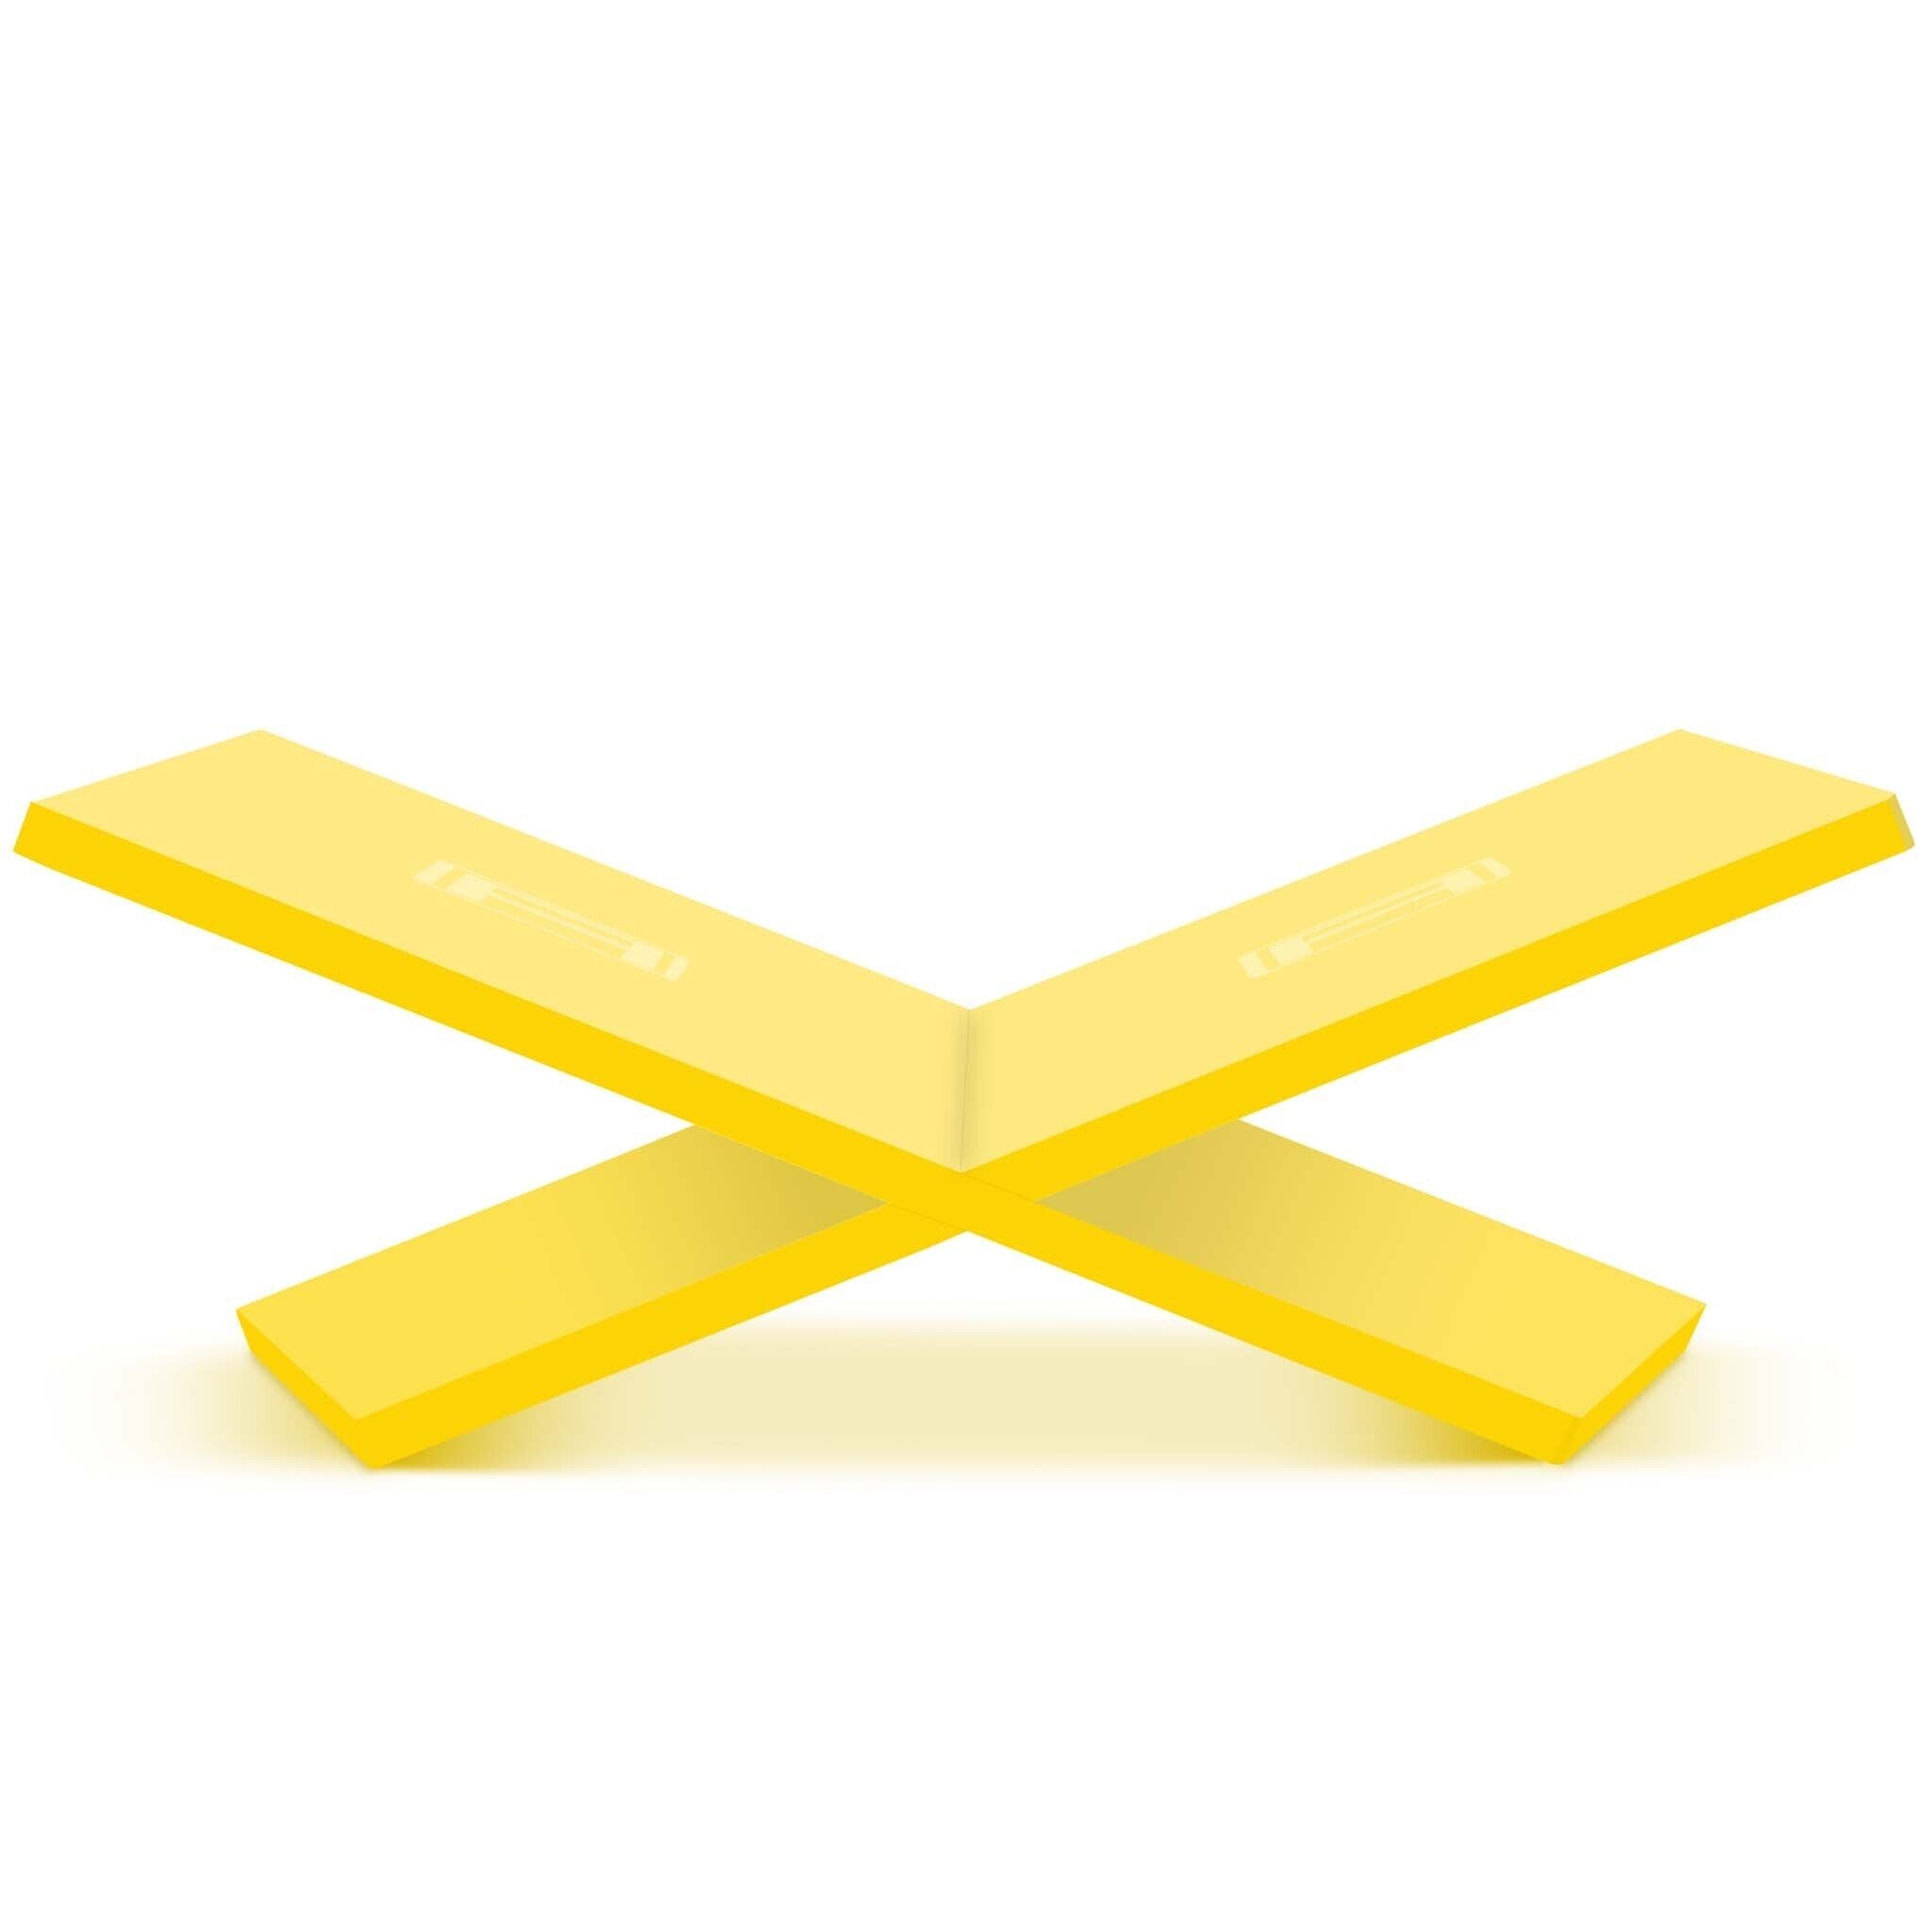 Assouline Assoulinestand - Solid Yellow